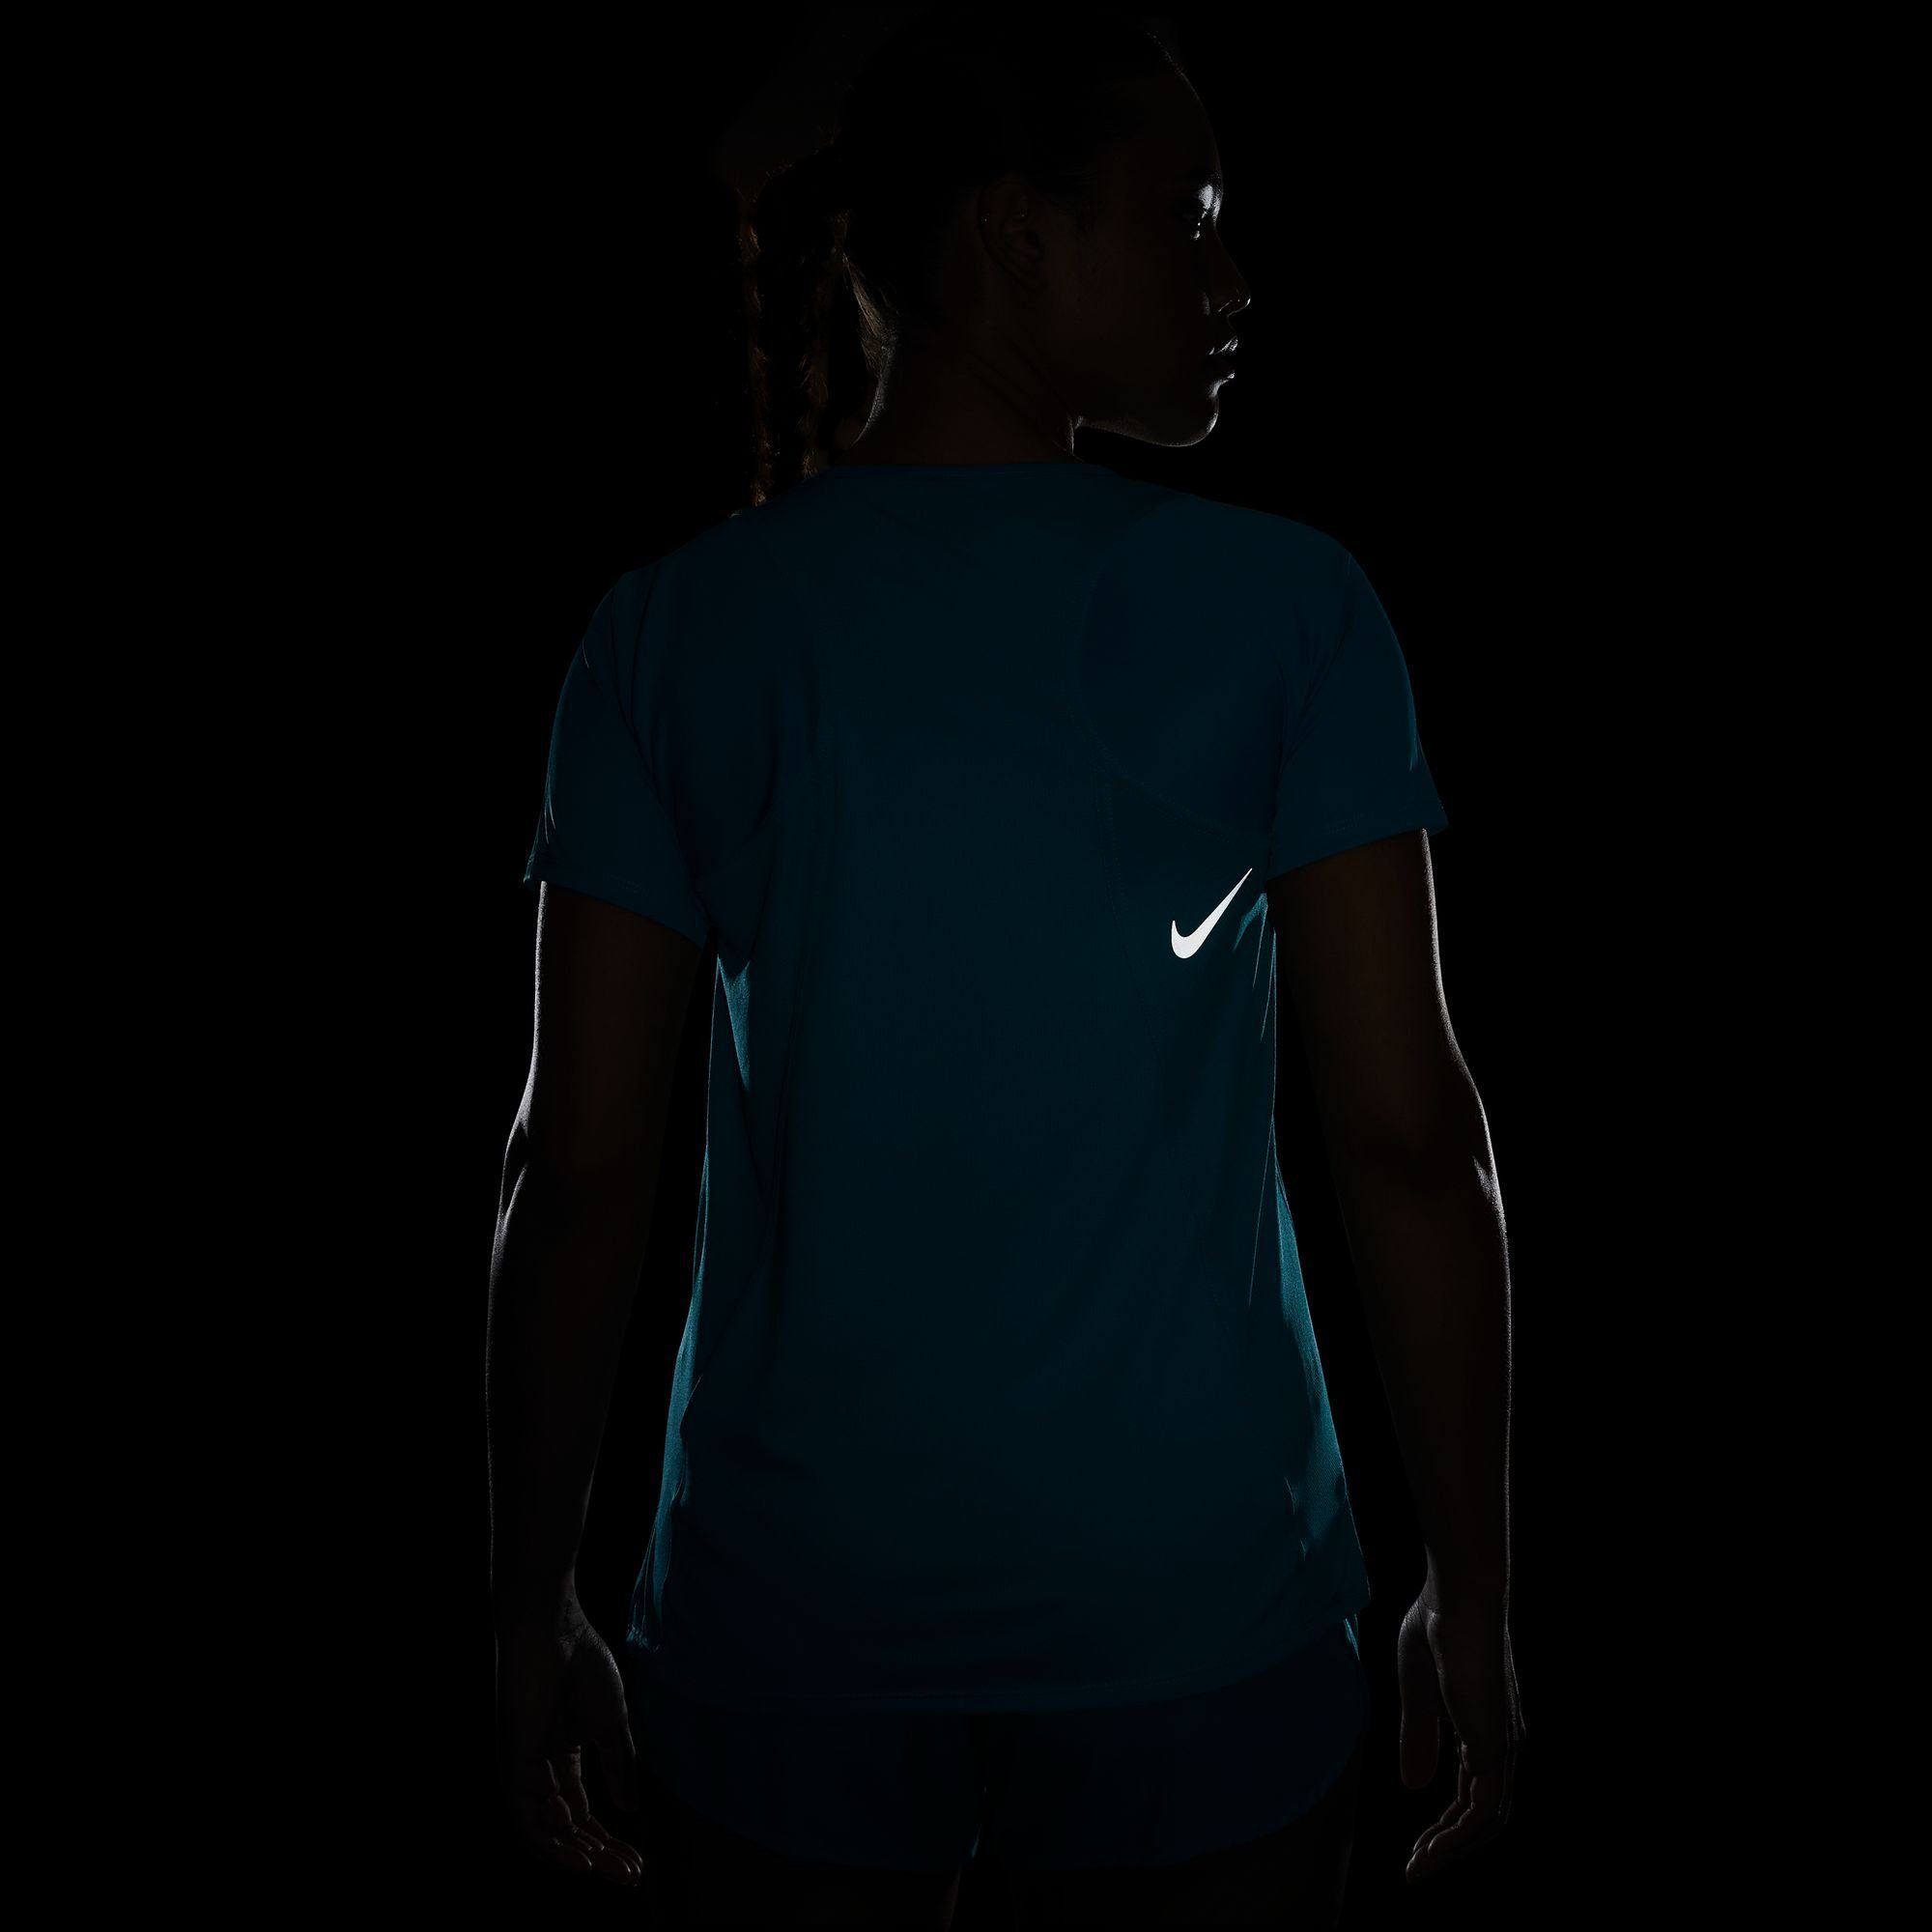 Laufshirt TOP SILV RACE RAPID WOMEN'S Nike SHORT-SLEEVE TEAL/REFLECTIVE RUNNING DRI-FIT